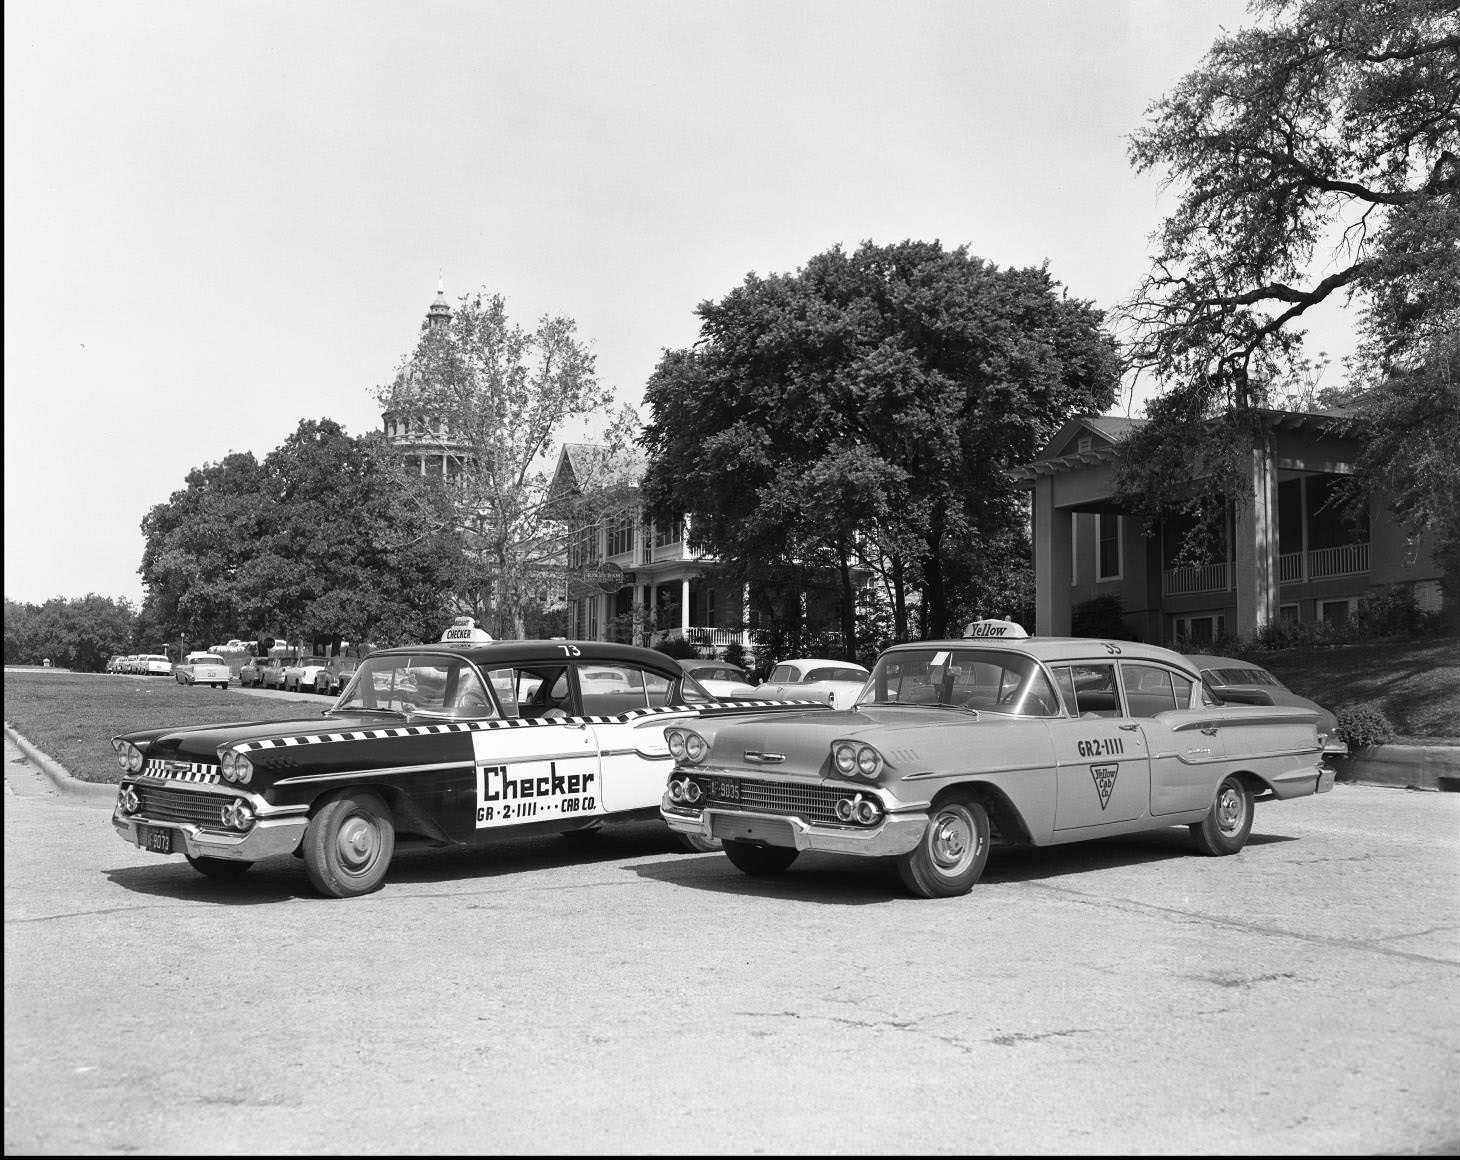 Checker Cab & Yellow Cab, 1958